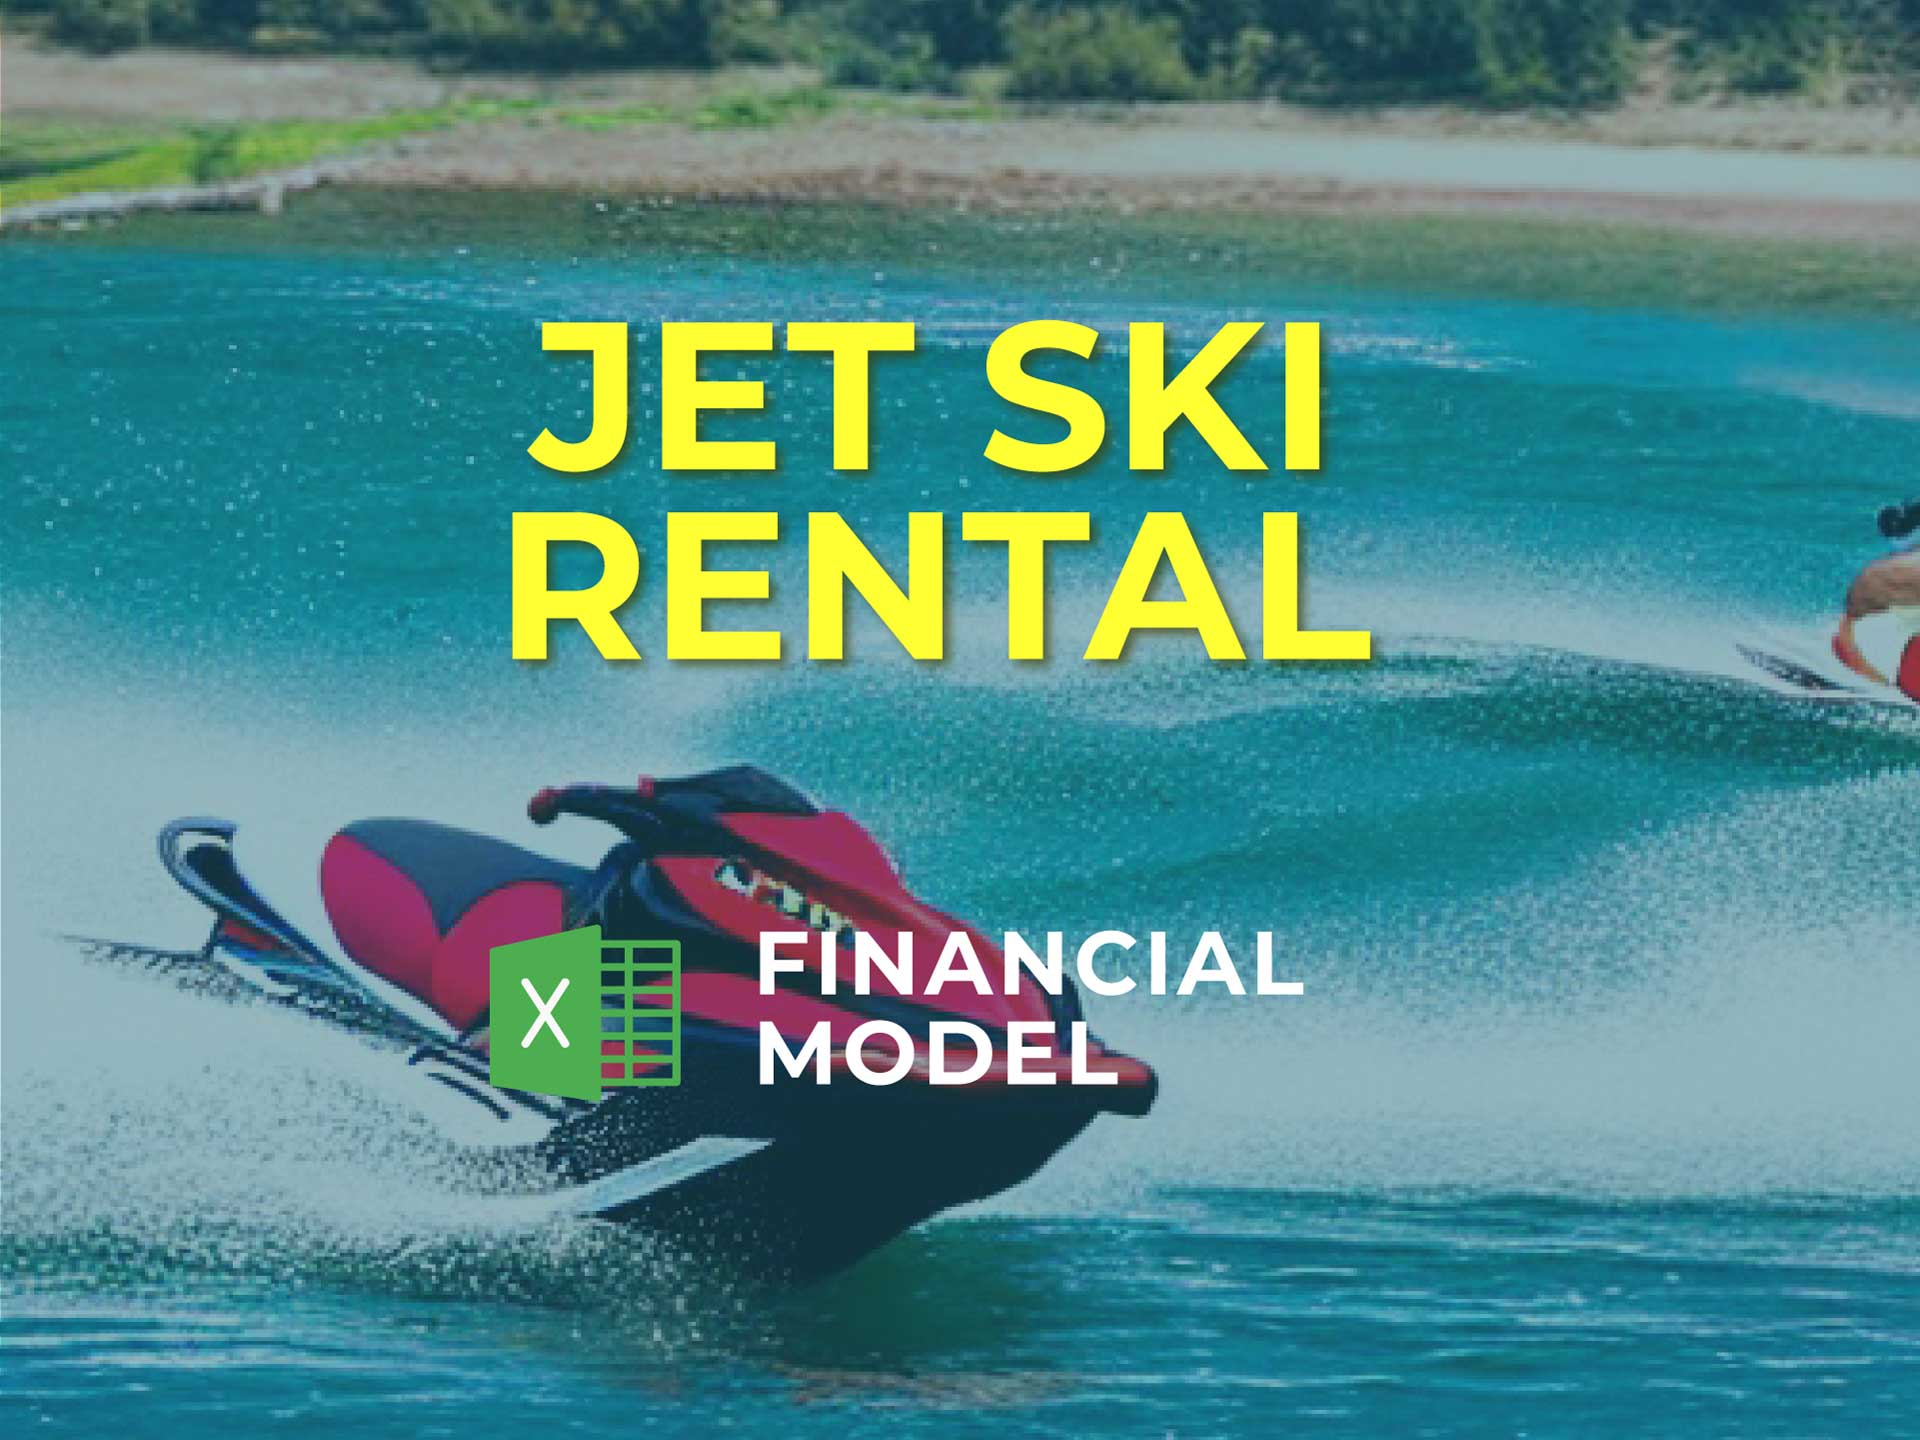 jet ski rental business plan pdf